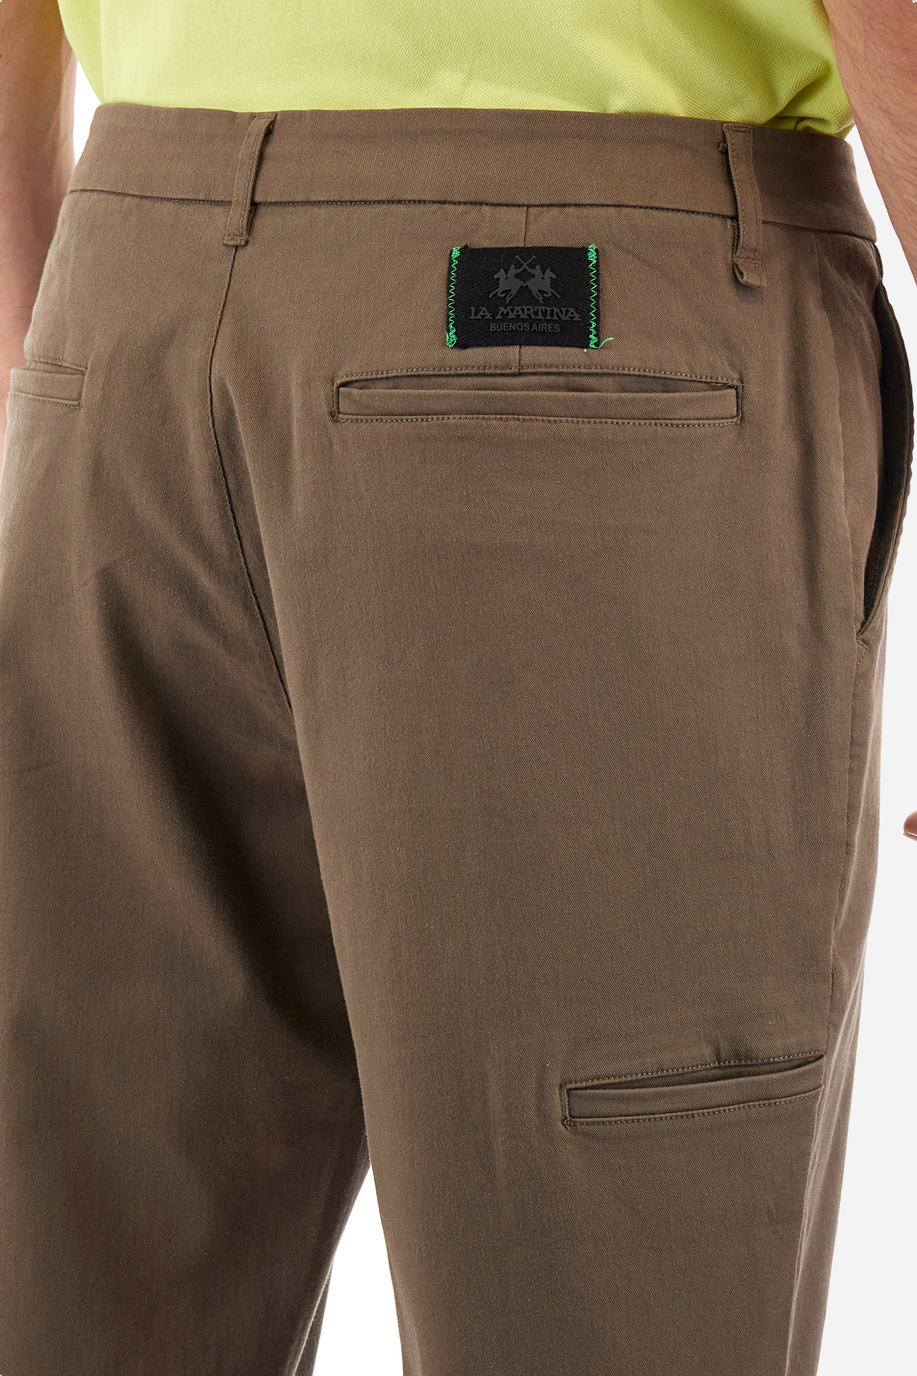 Pantalon chino homme coupe classique - Yirmeyahu - Logos | La Martina - Official Online Shop